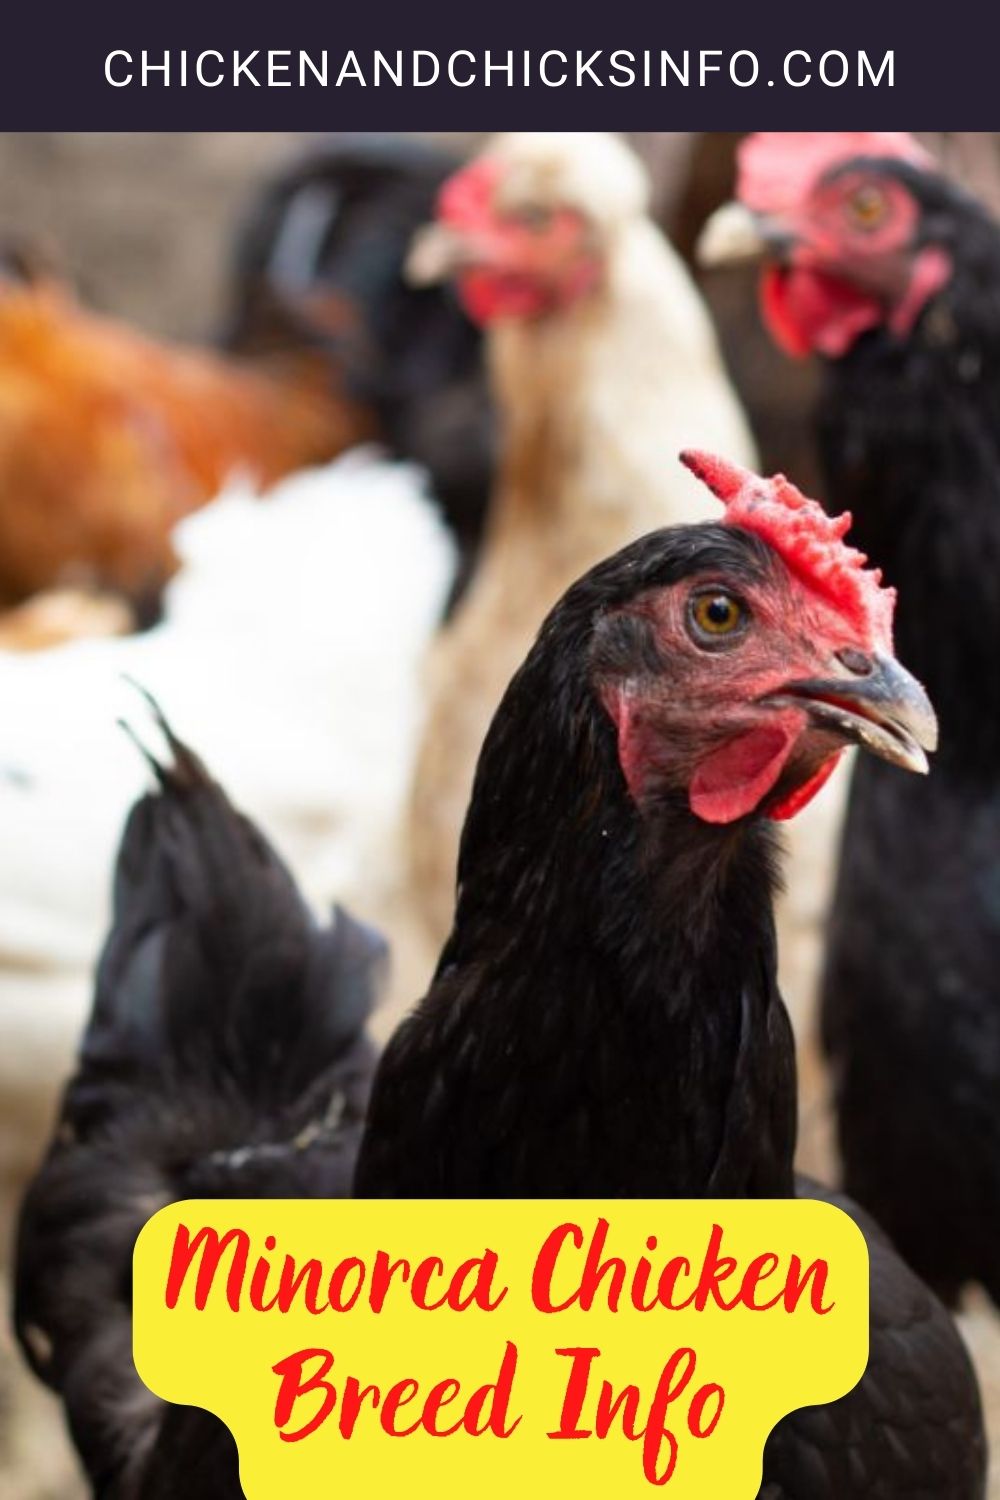 Minorca Chicken Breed Info pinterset image.